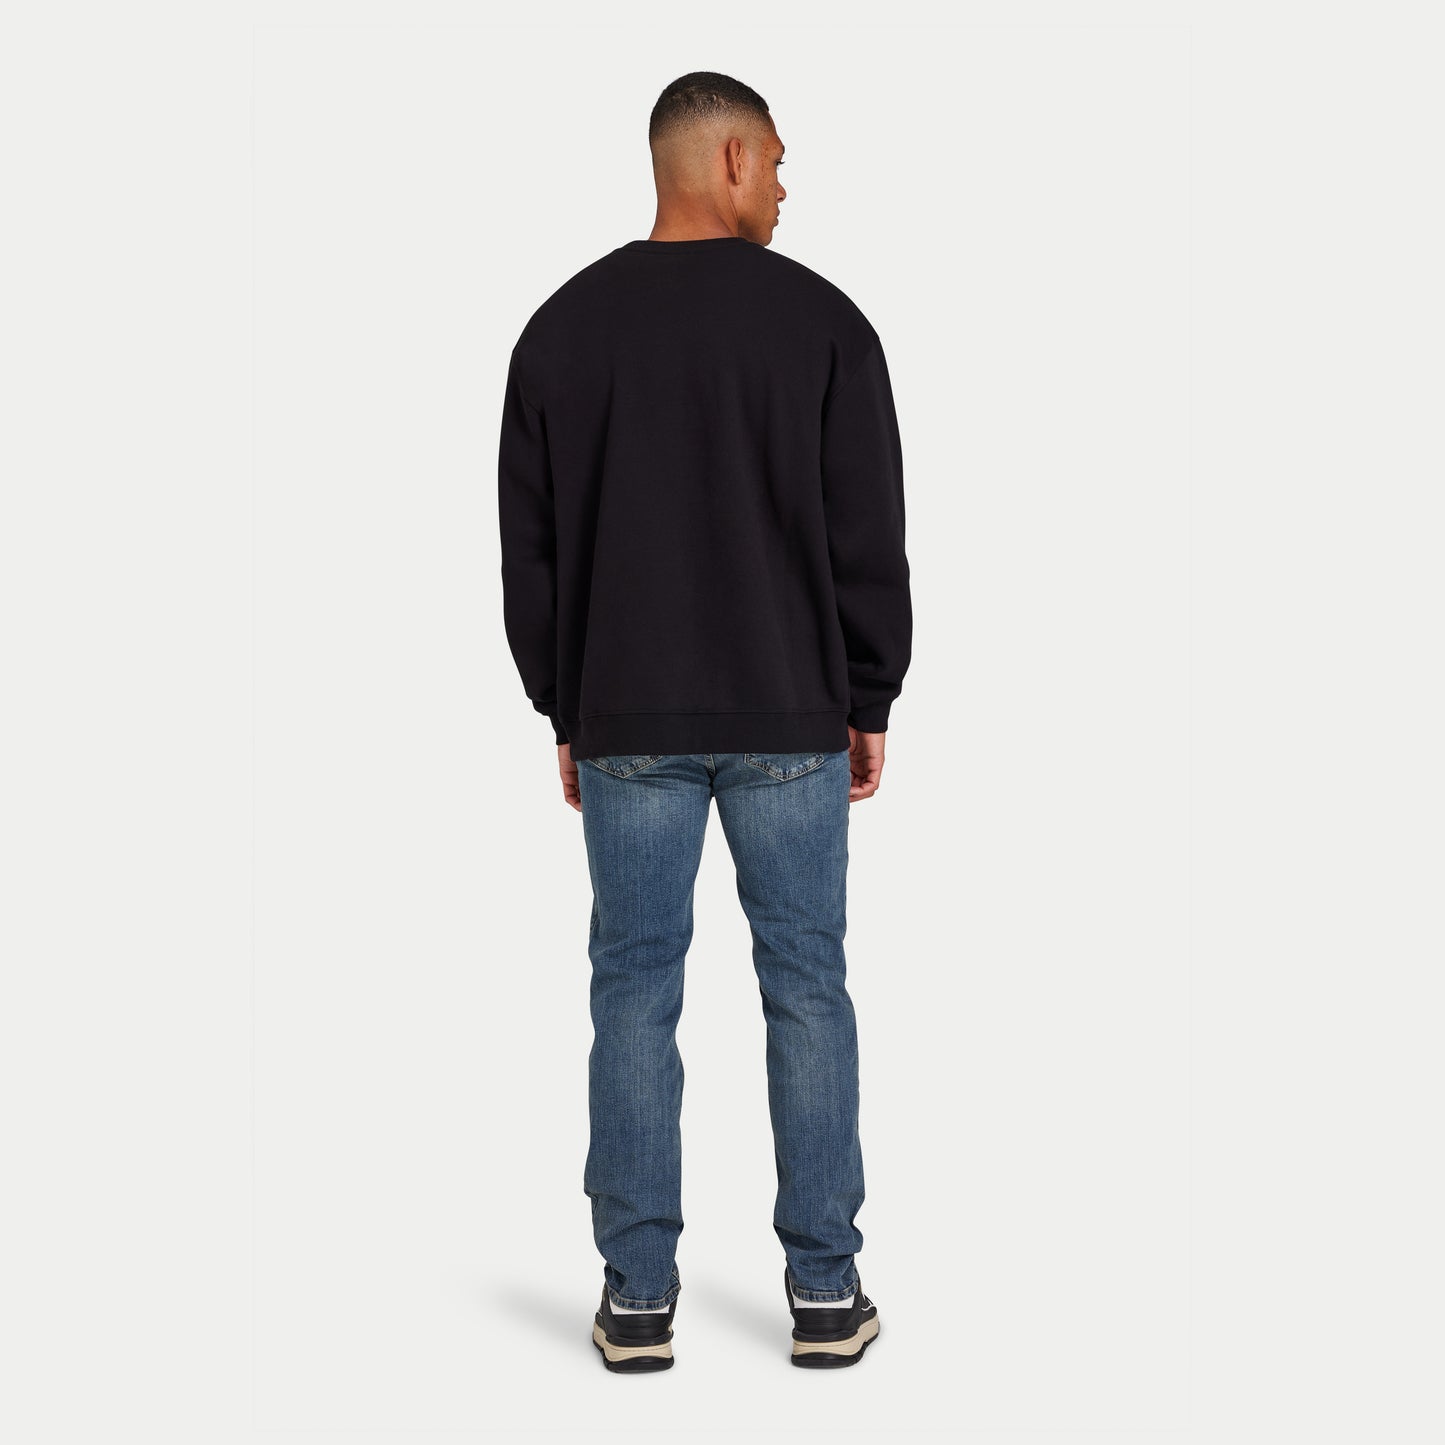 Mens Collective Sweatshirt - Black